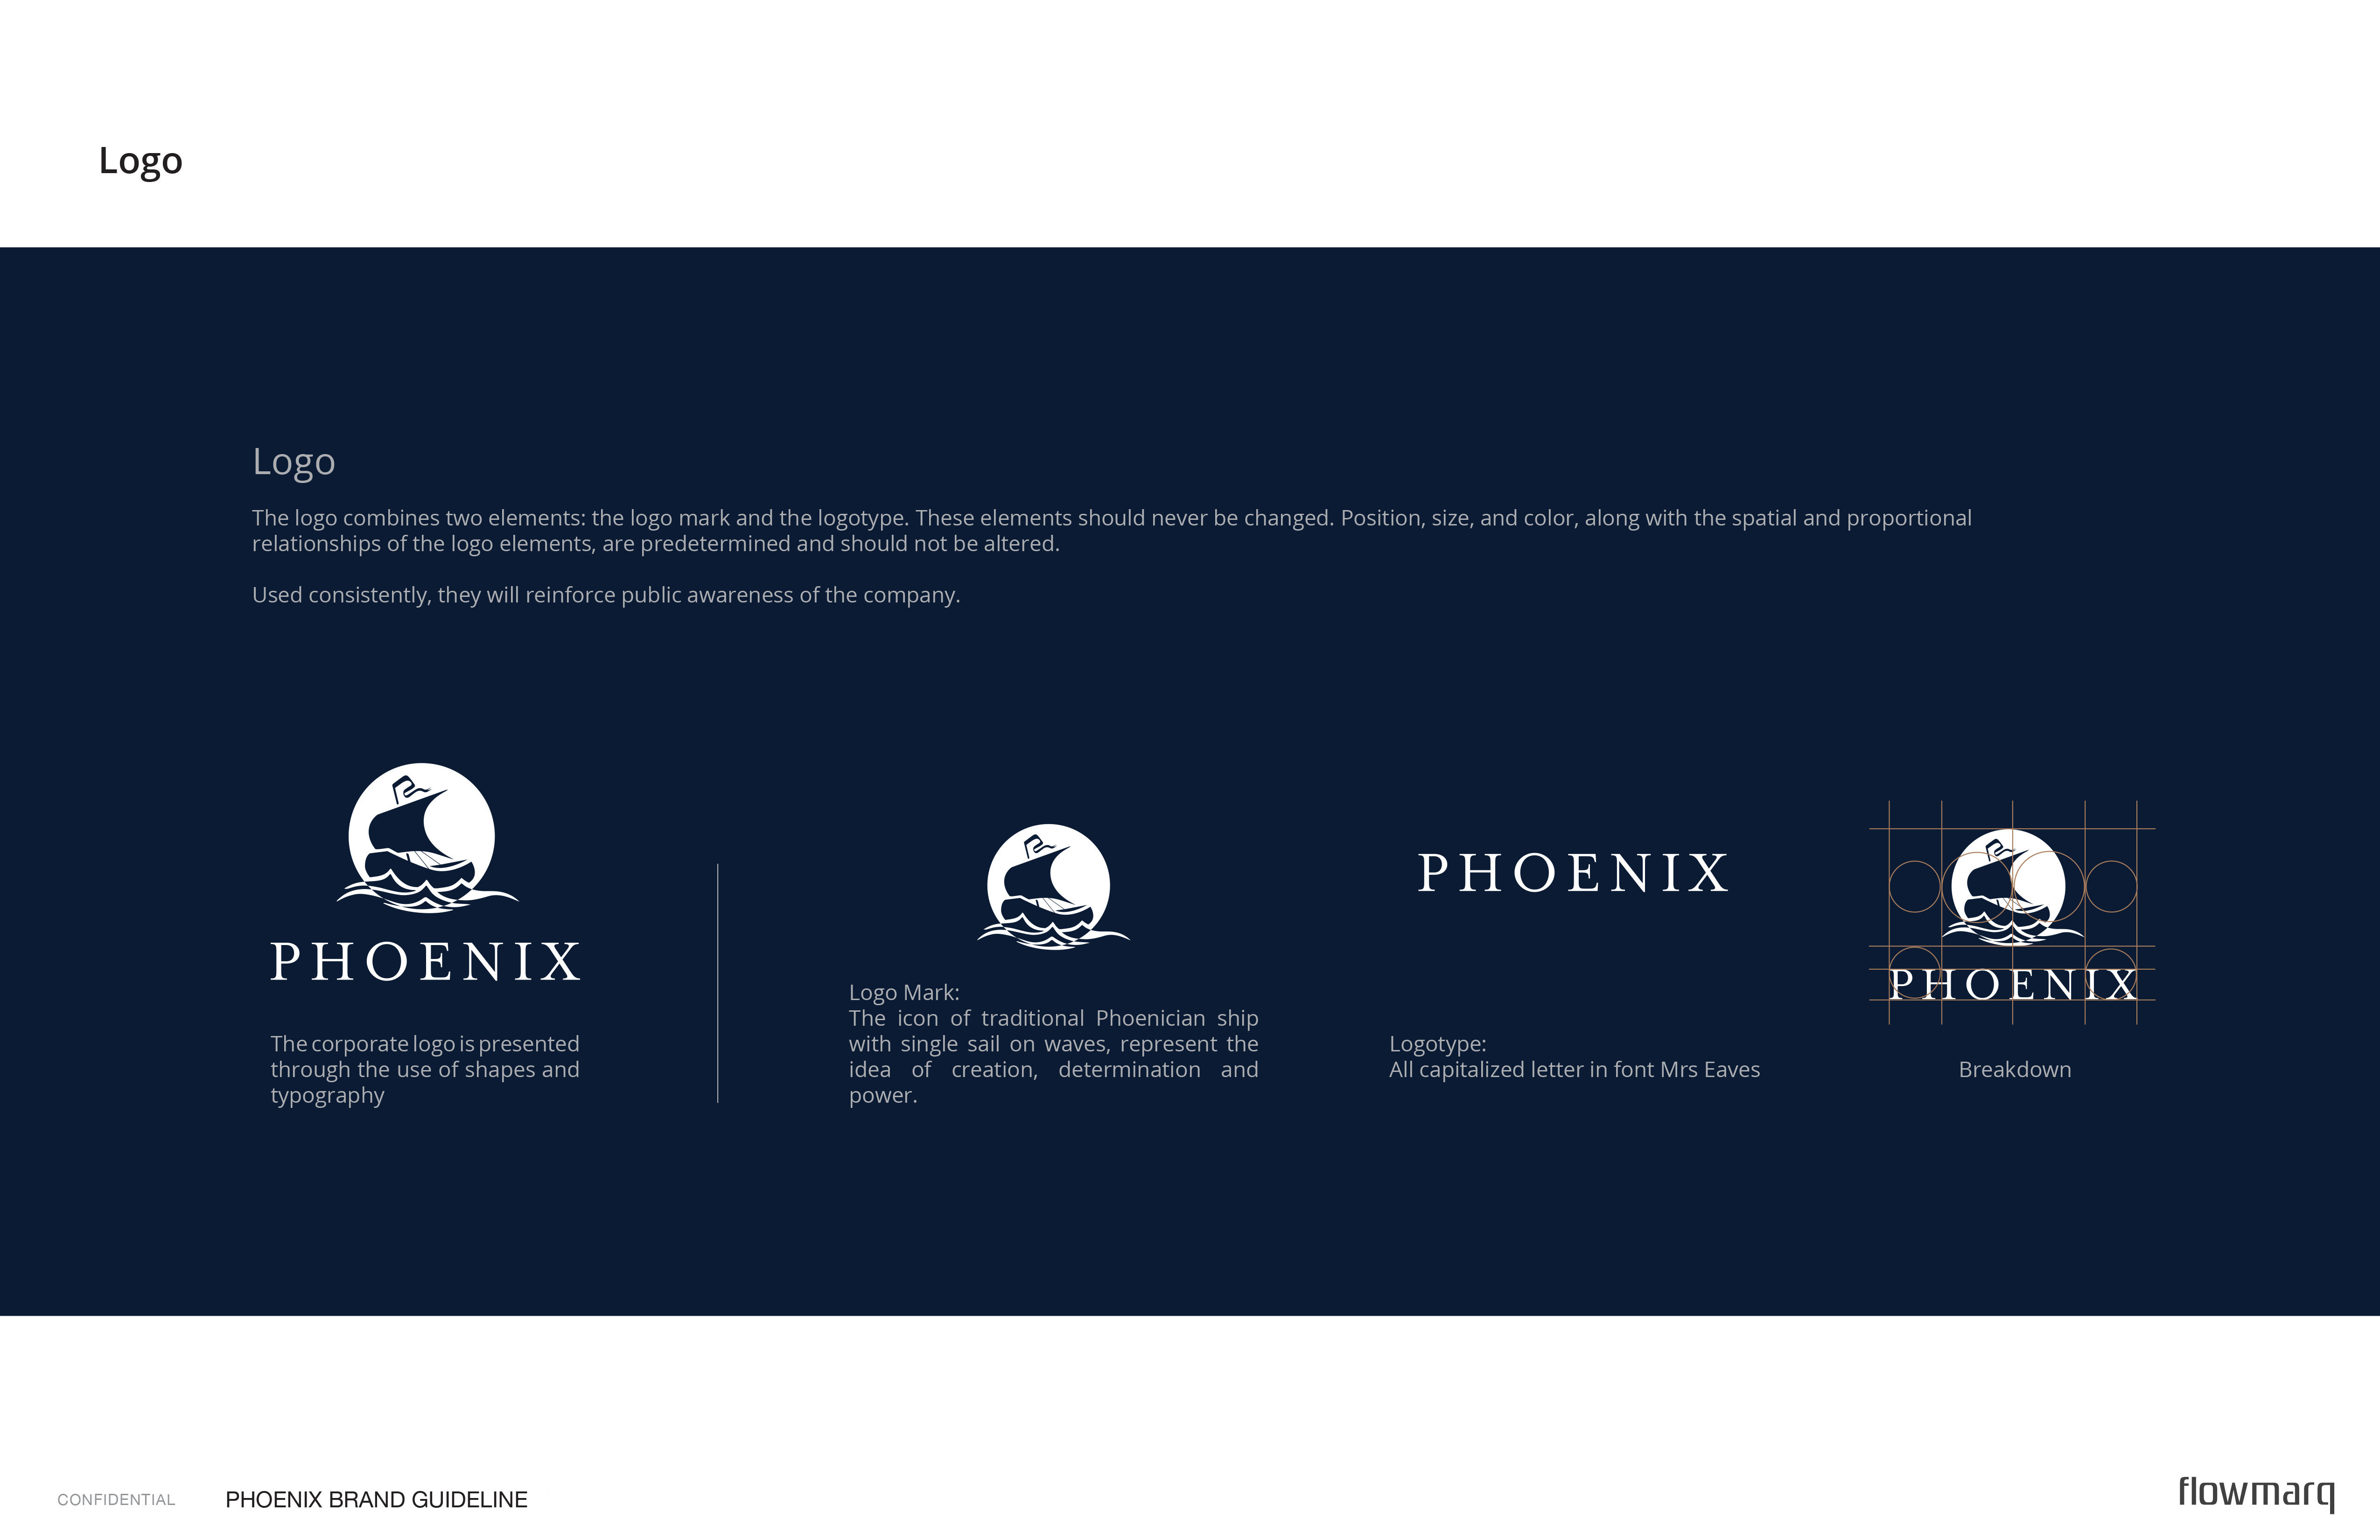 Phoenix - branding guide logo usage